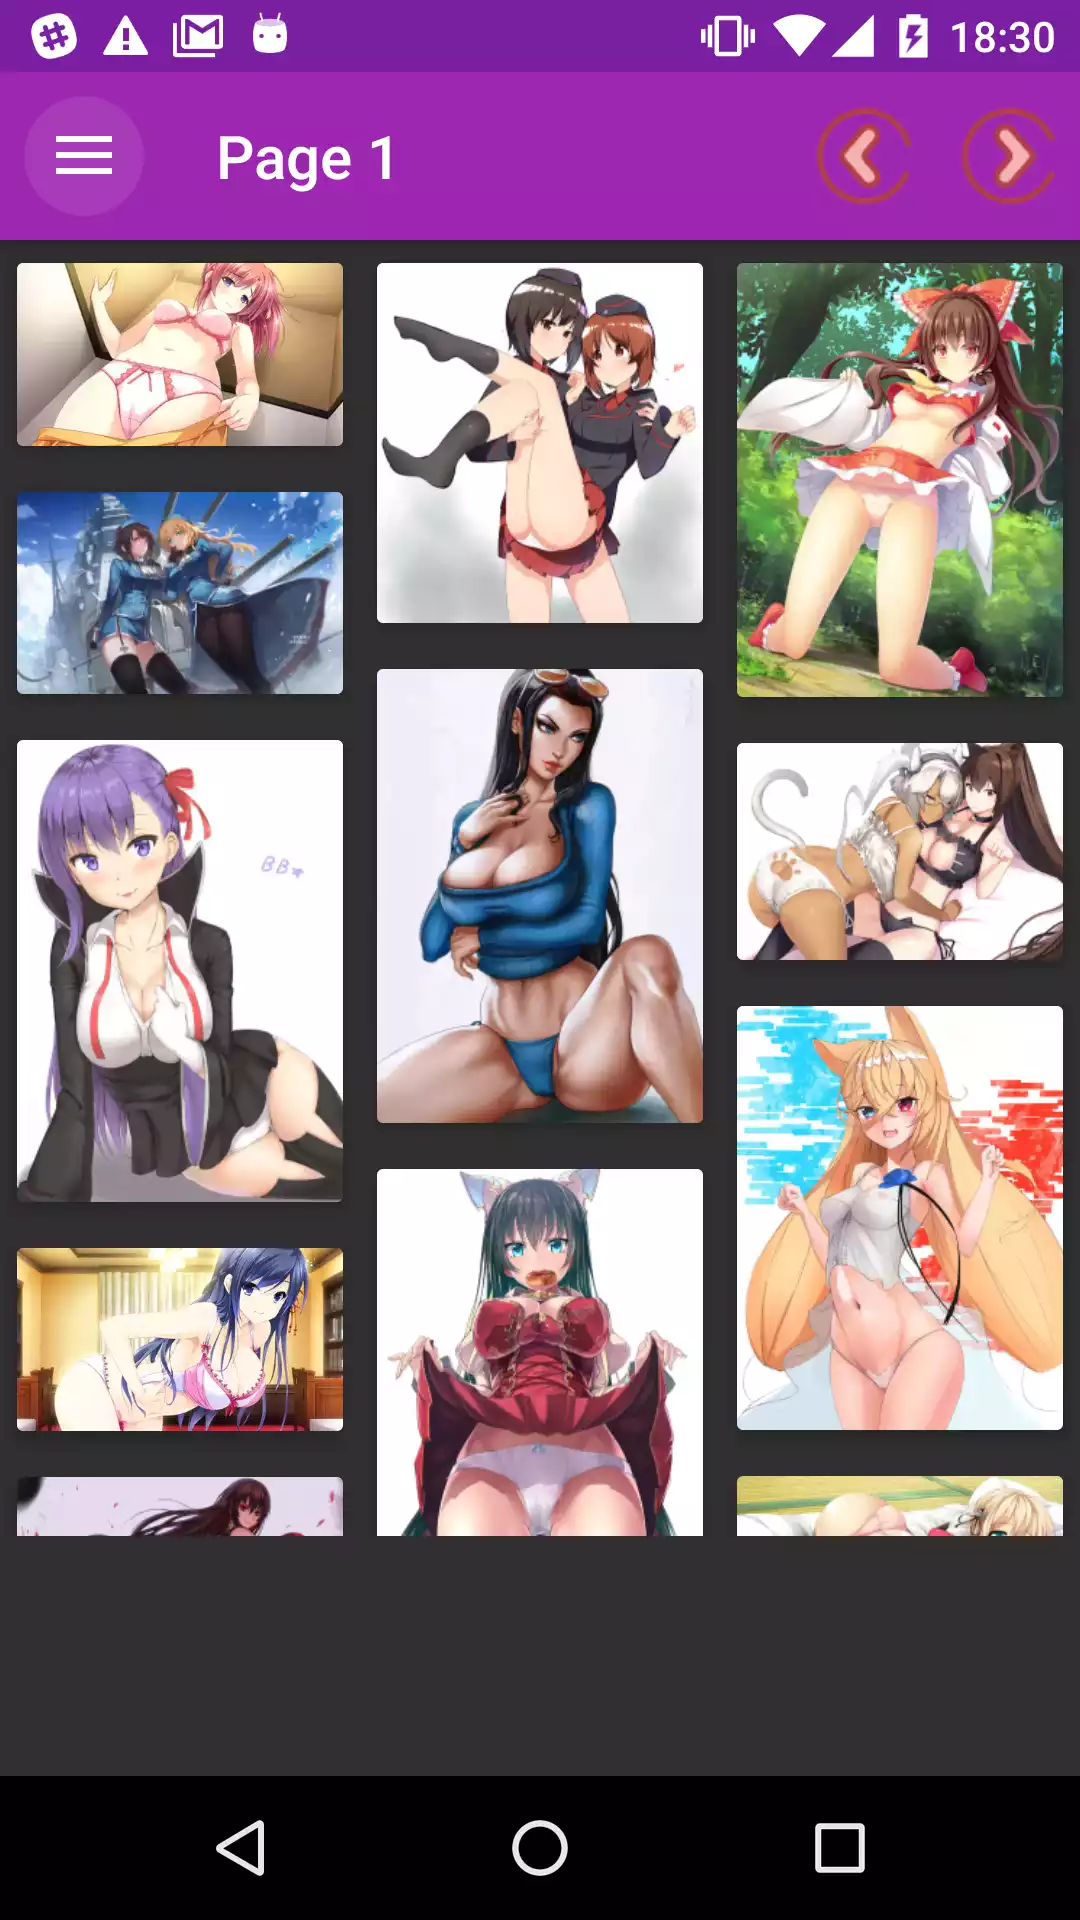 Panties Backgrounds app,gallery,hentai,pics,wallpaper,wallpapers,best,new,porn,android,apk,backgrounds,sexy,market,anime,images,futanari,adult,photos,aplikasi,free